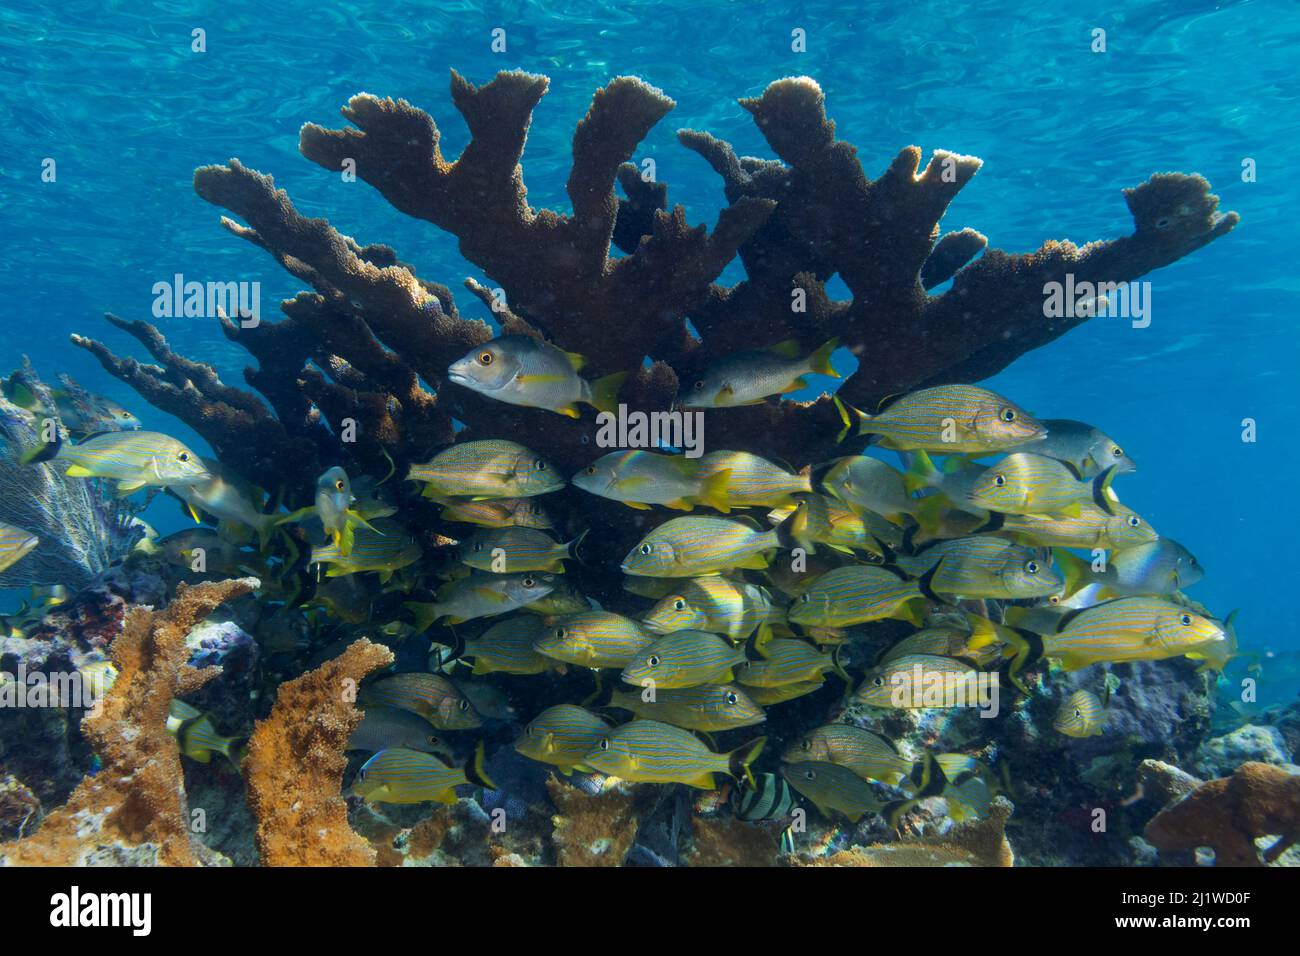 Schoolmaster snapper (Lutjanus apodus) and Bluestriped grunt (Haemulon sciurus) seeking protection in Elkhorn Coral (Acropora palmata), Jardines de la Stock Photo